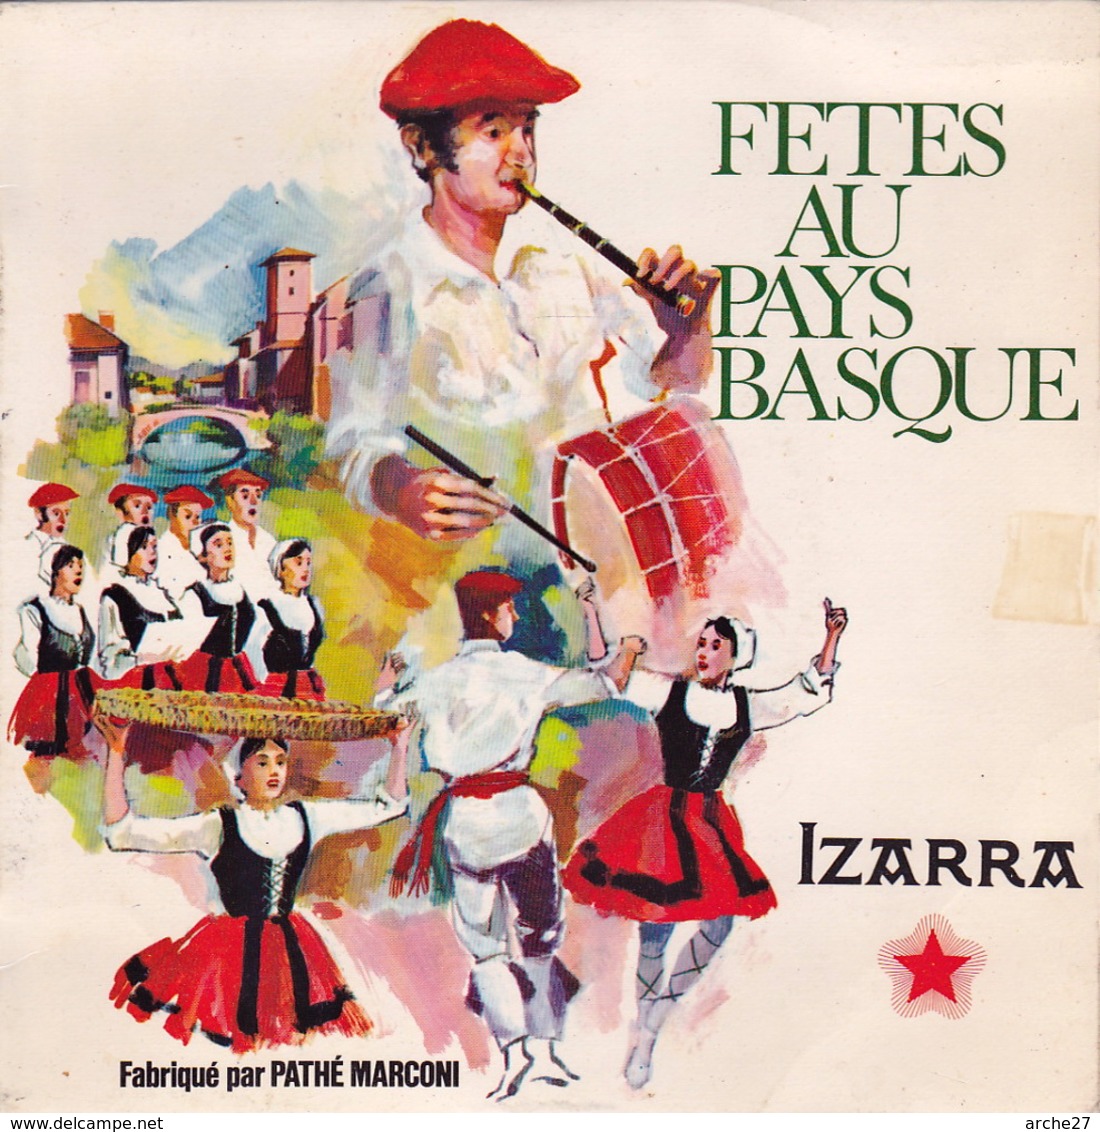 FETES DU PAYS BASQUE - EP - 45T - Disque Vinyle - Izarra - 68041 - Wereldmuziek